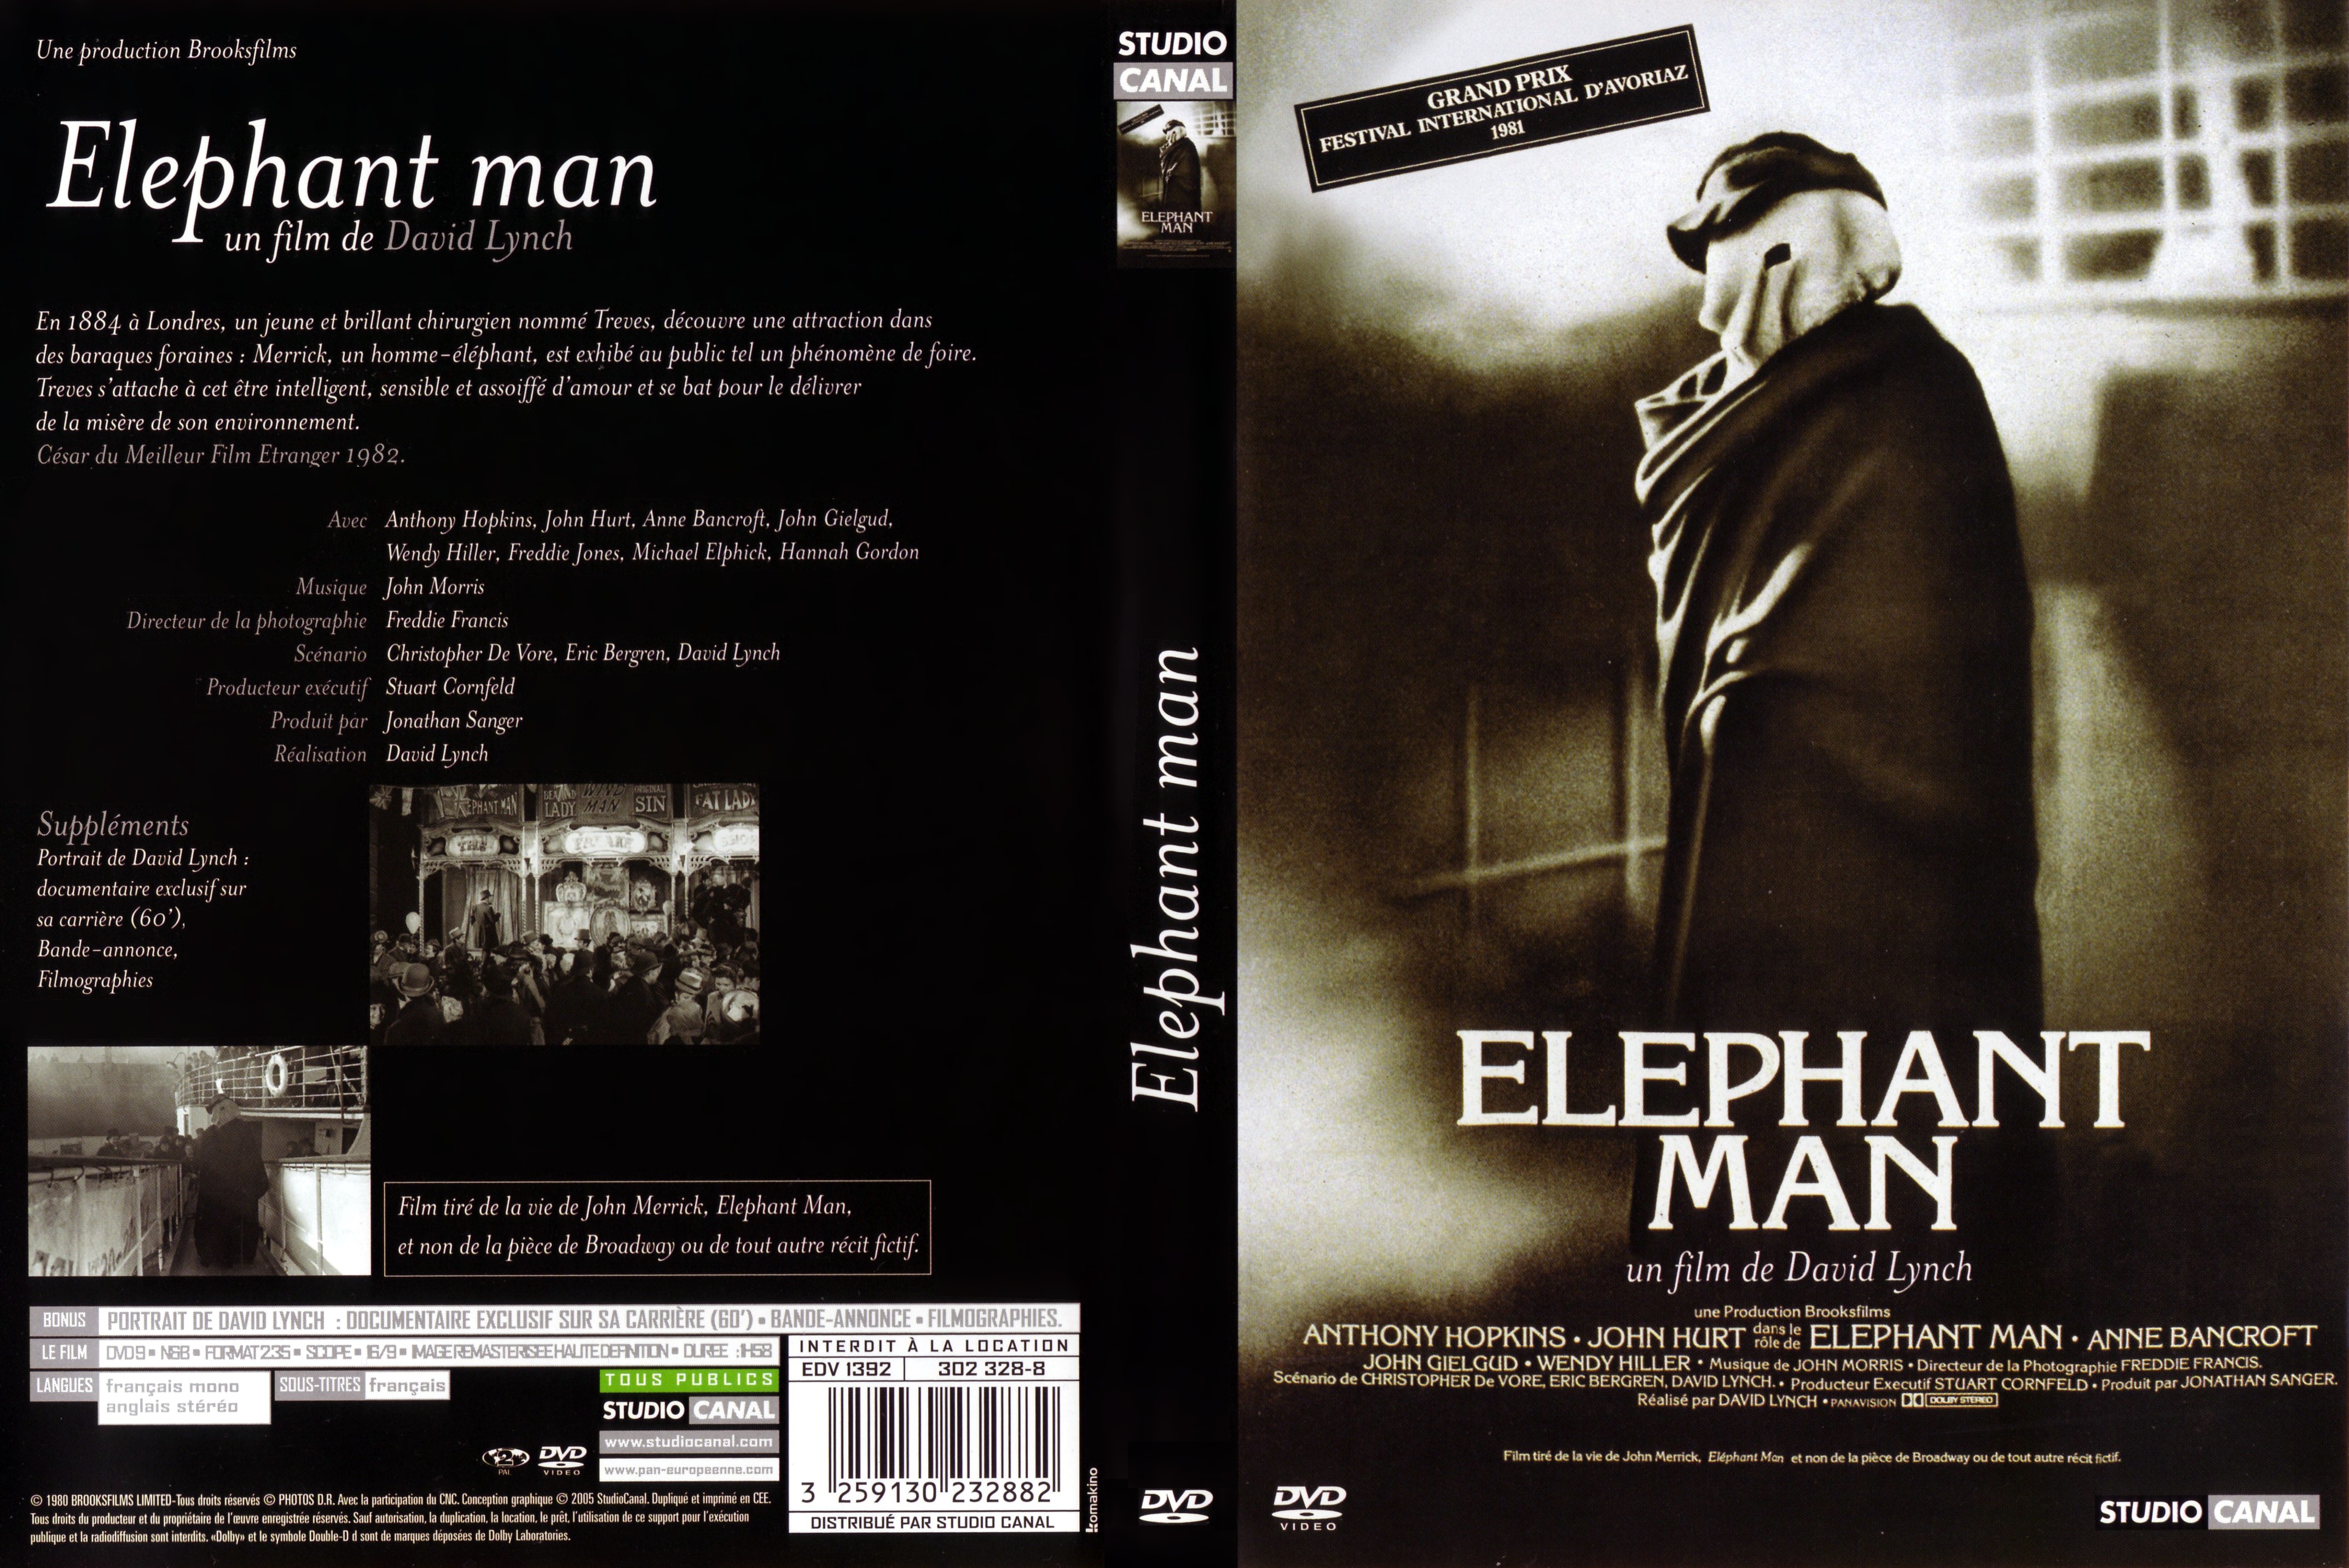 Jaquette DVD Elephant man v3